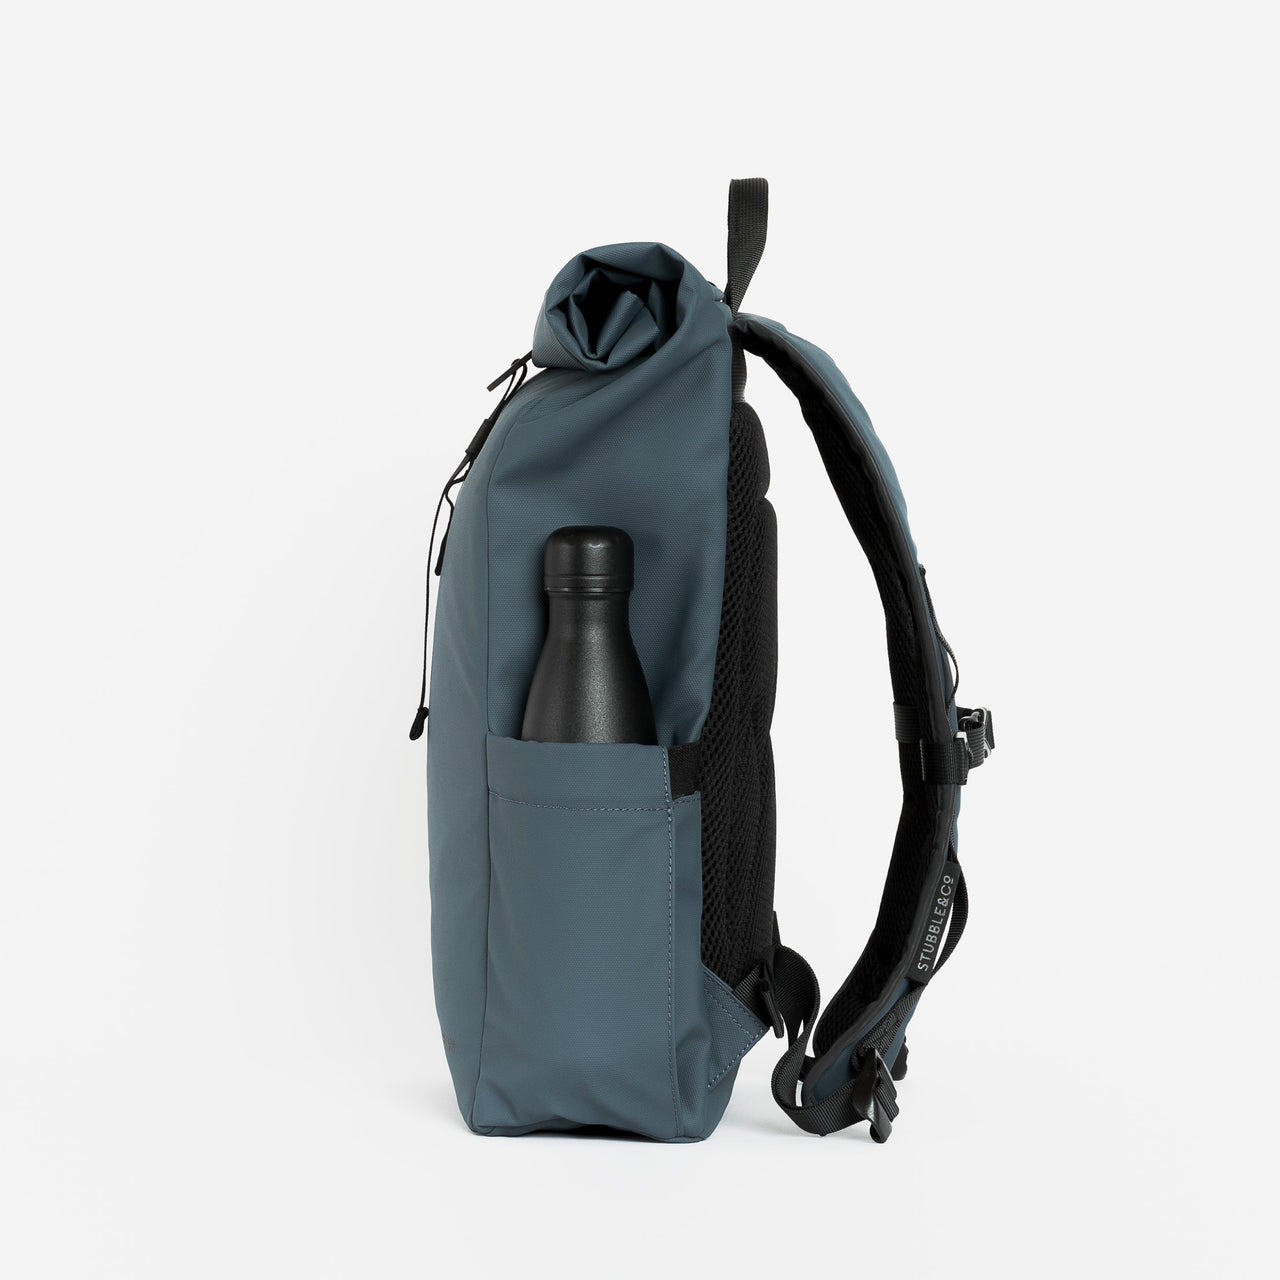 Roll Top Mini backpack in Tasmin Blue